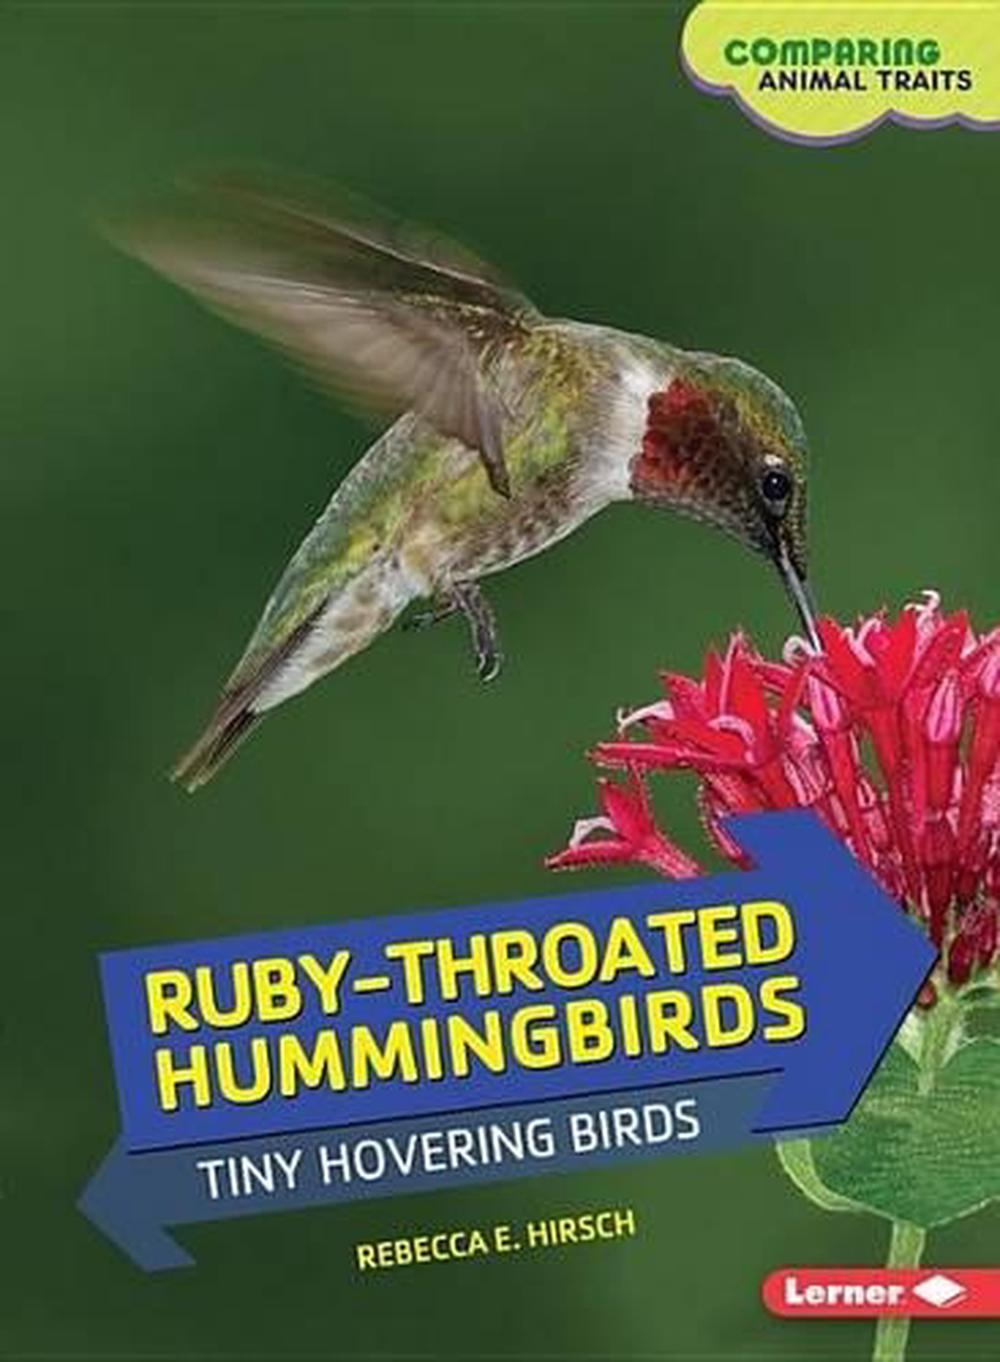 RubyThroated Hummingbirds Tiny Hovering Birds by Rebecca E. Hirsch (English) P eBay